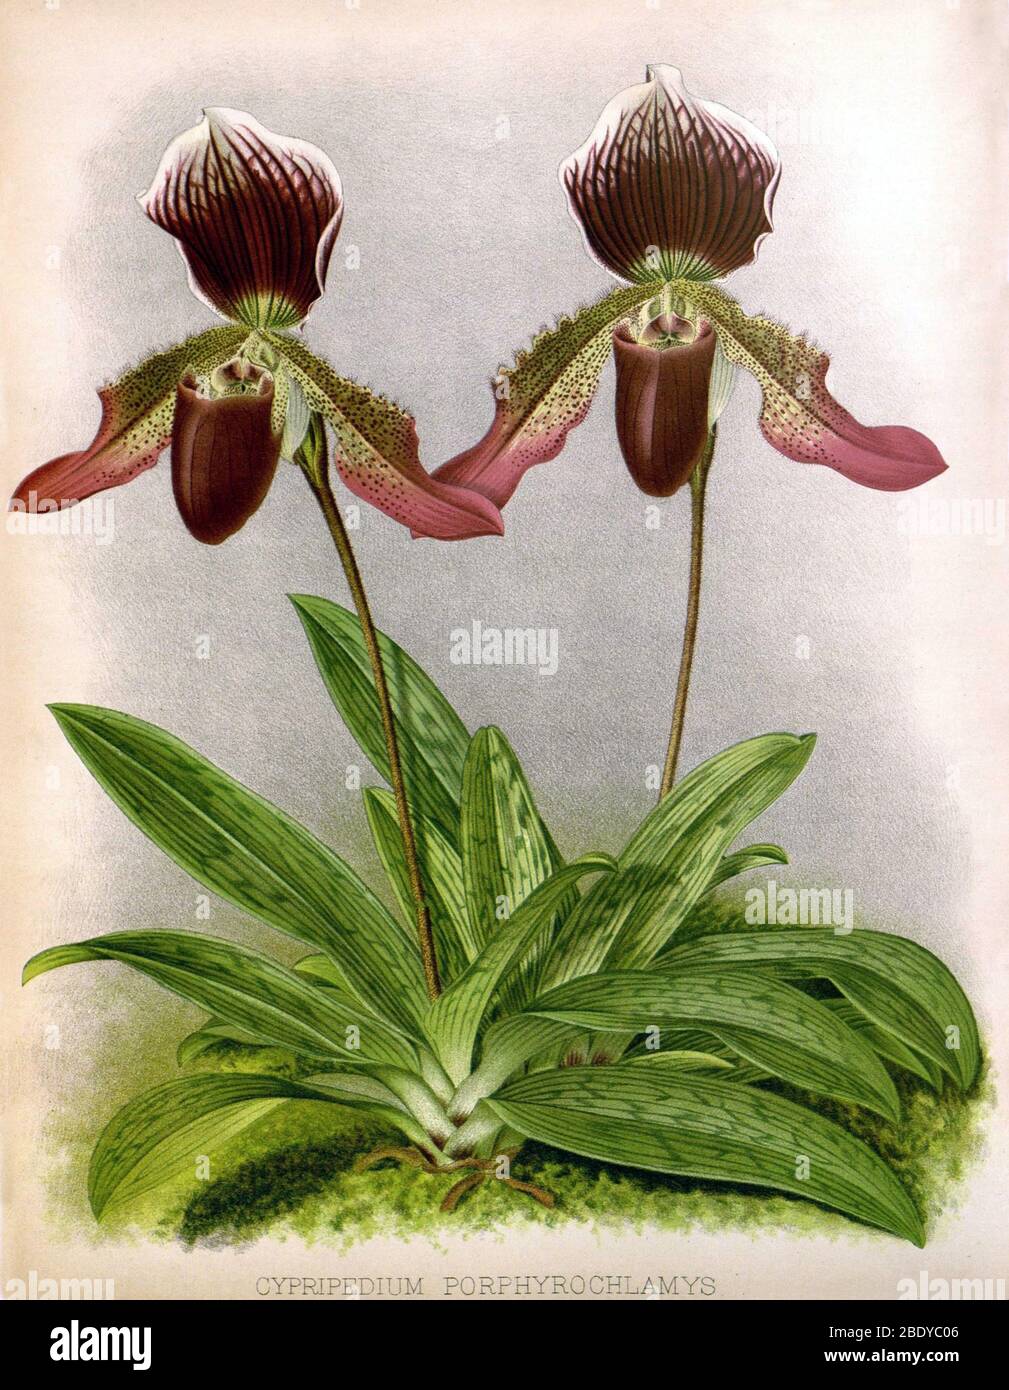 Orchid, Cypripedium porphyrochlamys, 1891 Stock Photo